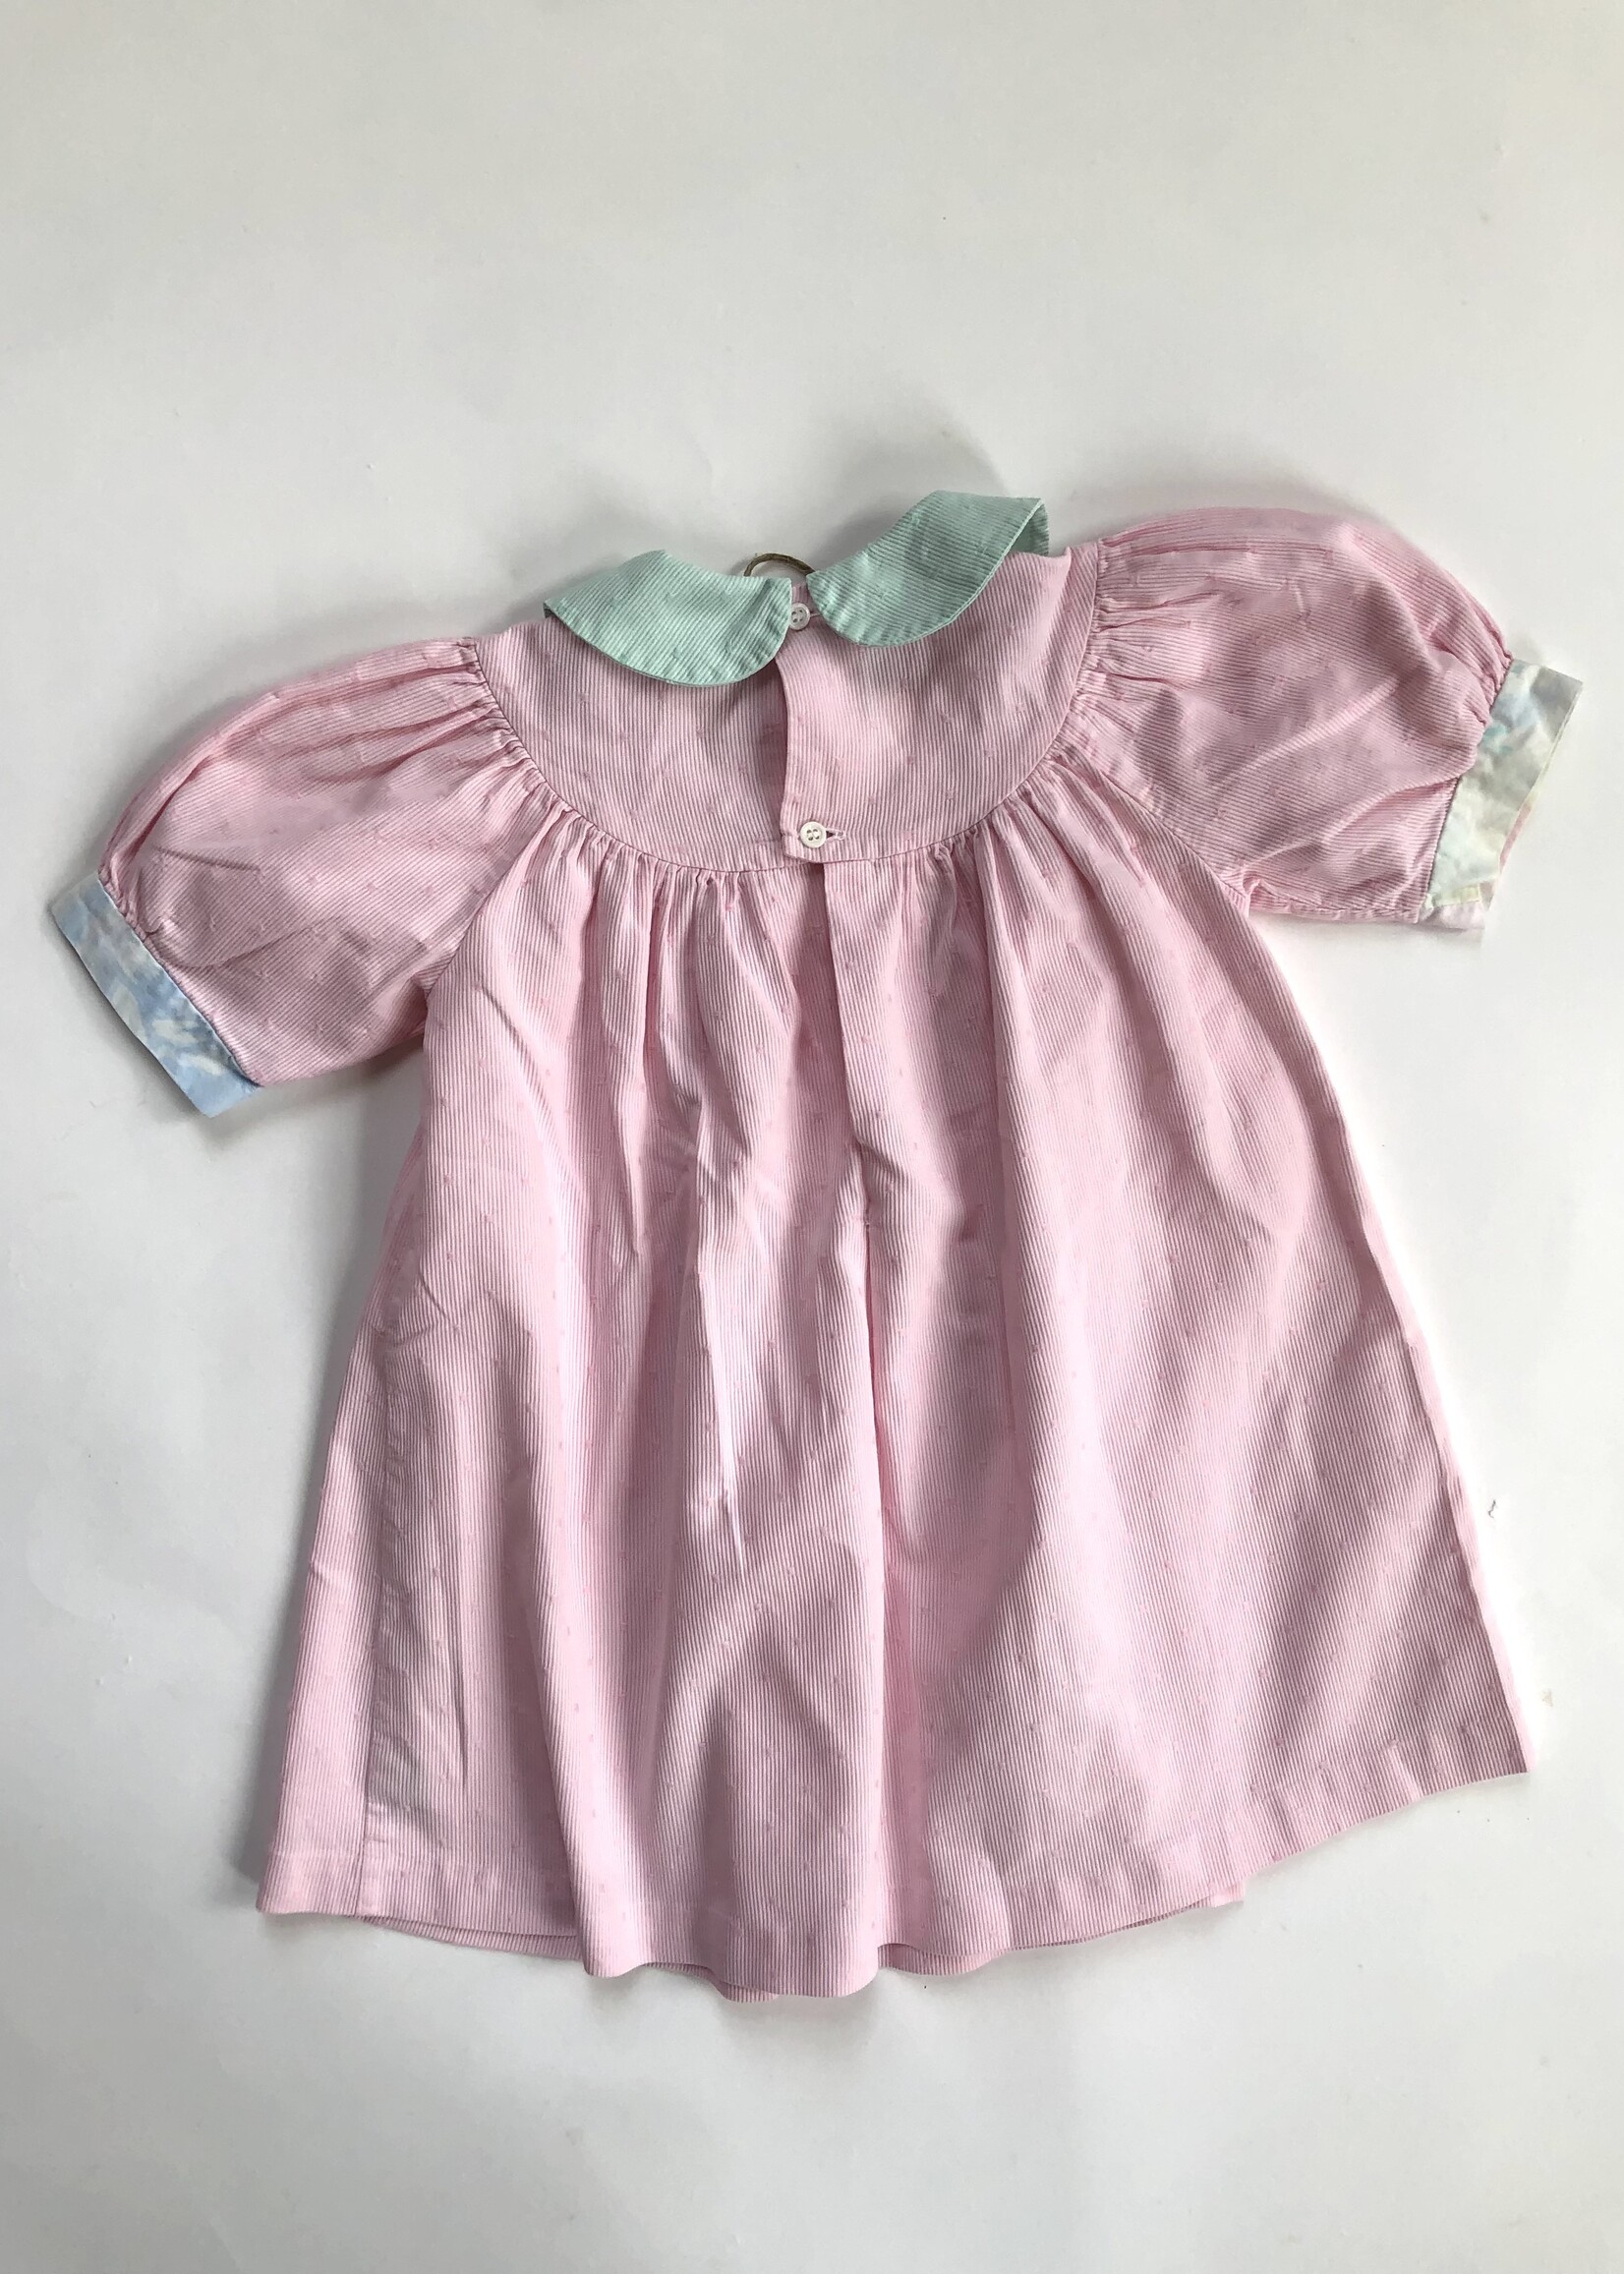 Vintage Sweet pastel pink dress 12m